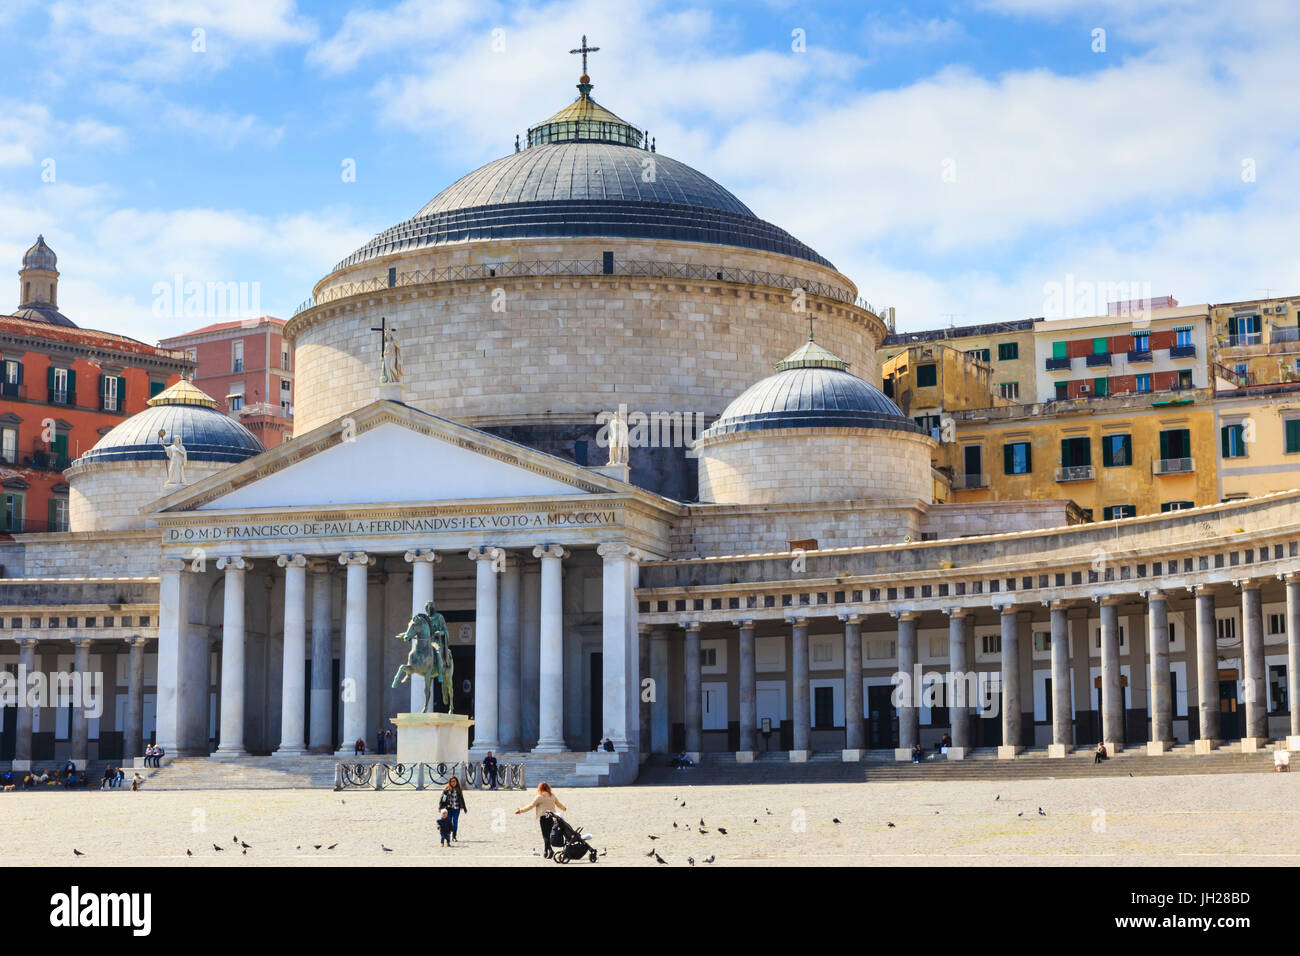 Pigeons and people in the Piazza del Plebiscito with the Basilica di San Francesco di Paola, City of Naples, Campania, Italy Stock Photo